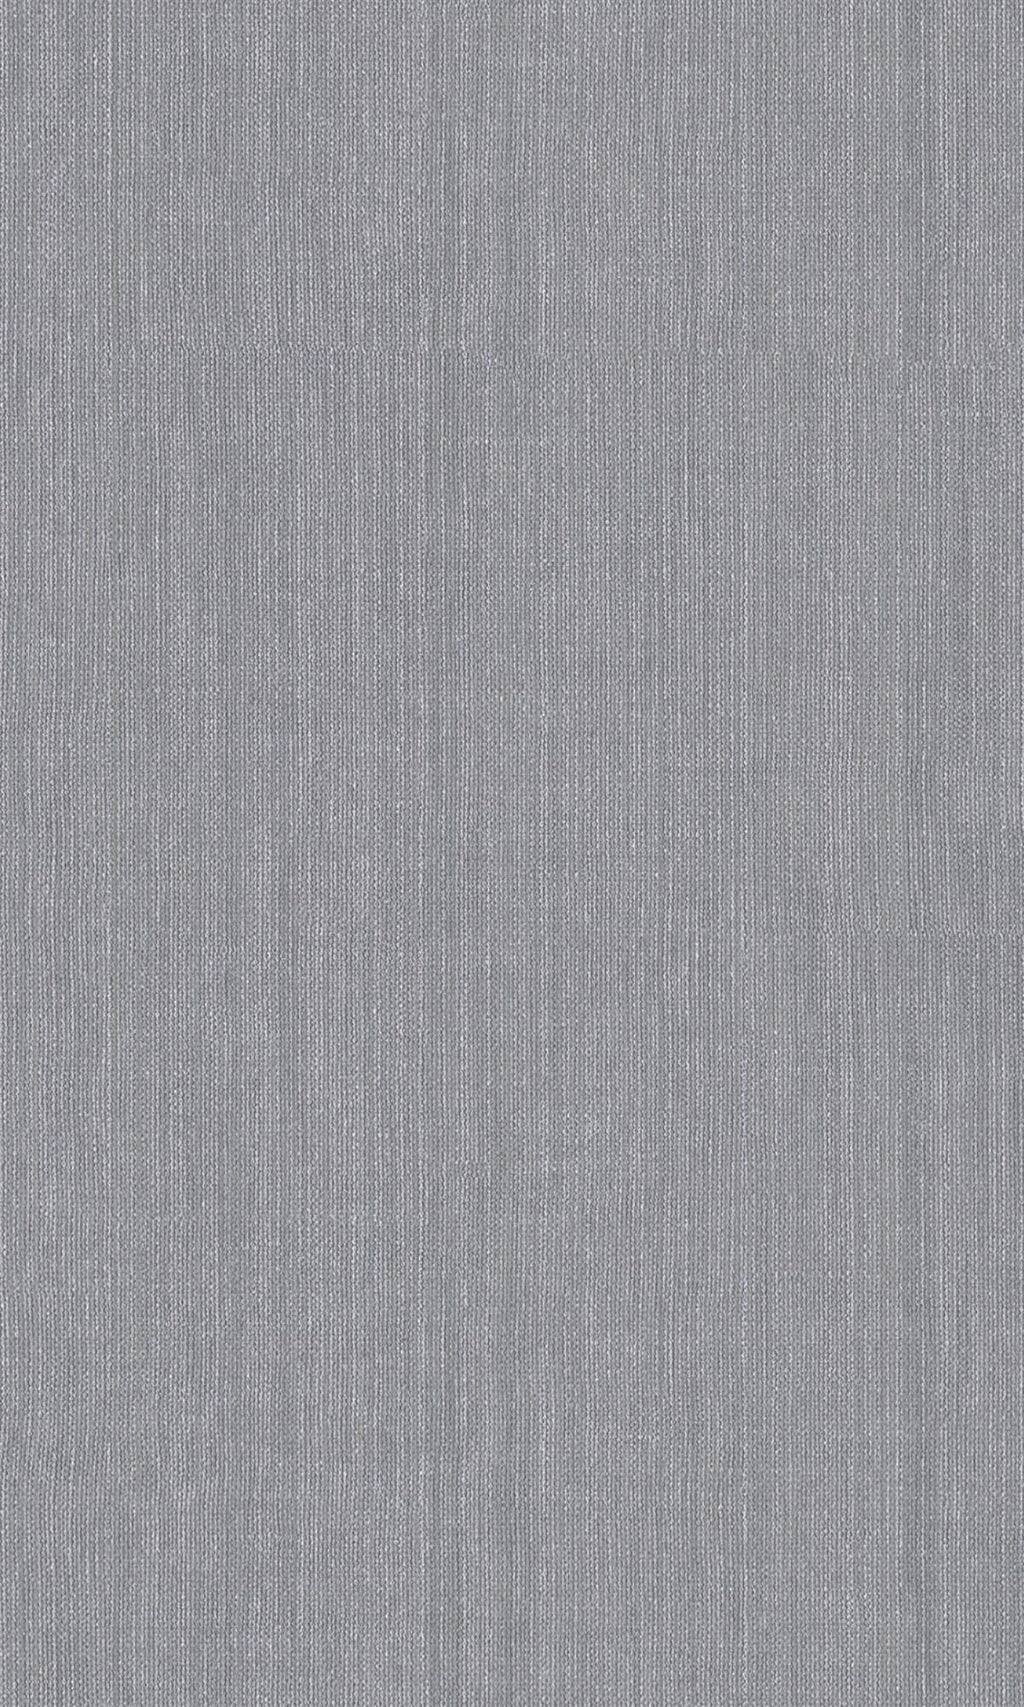 Blue Grey Textured Vinyl Wallpaper C7073